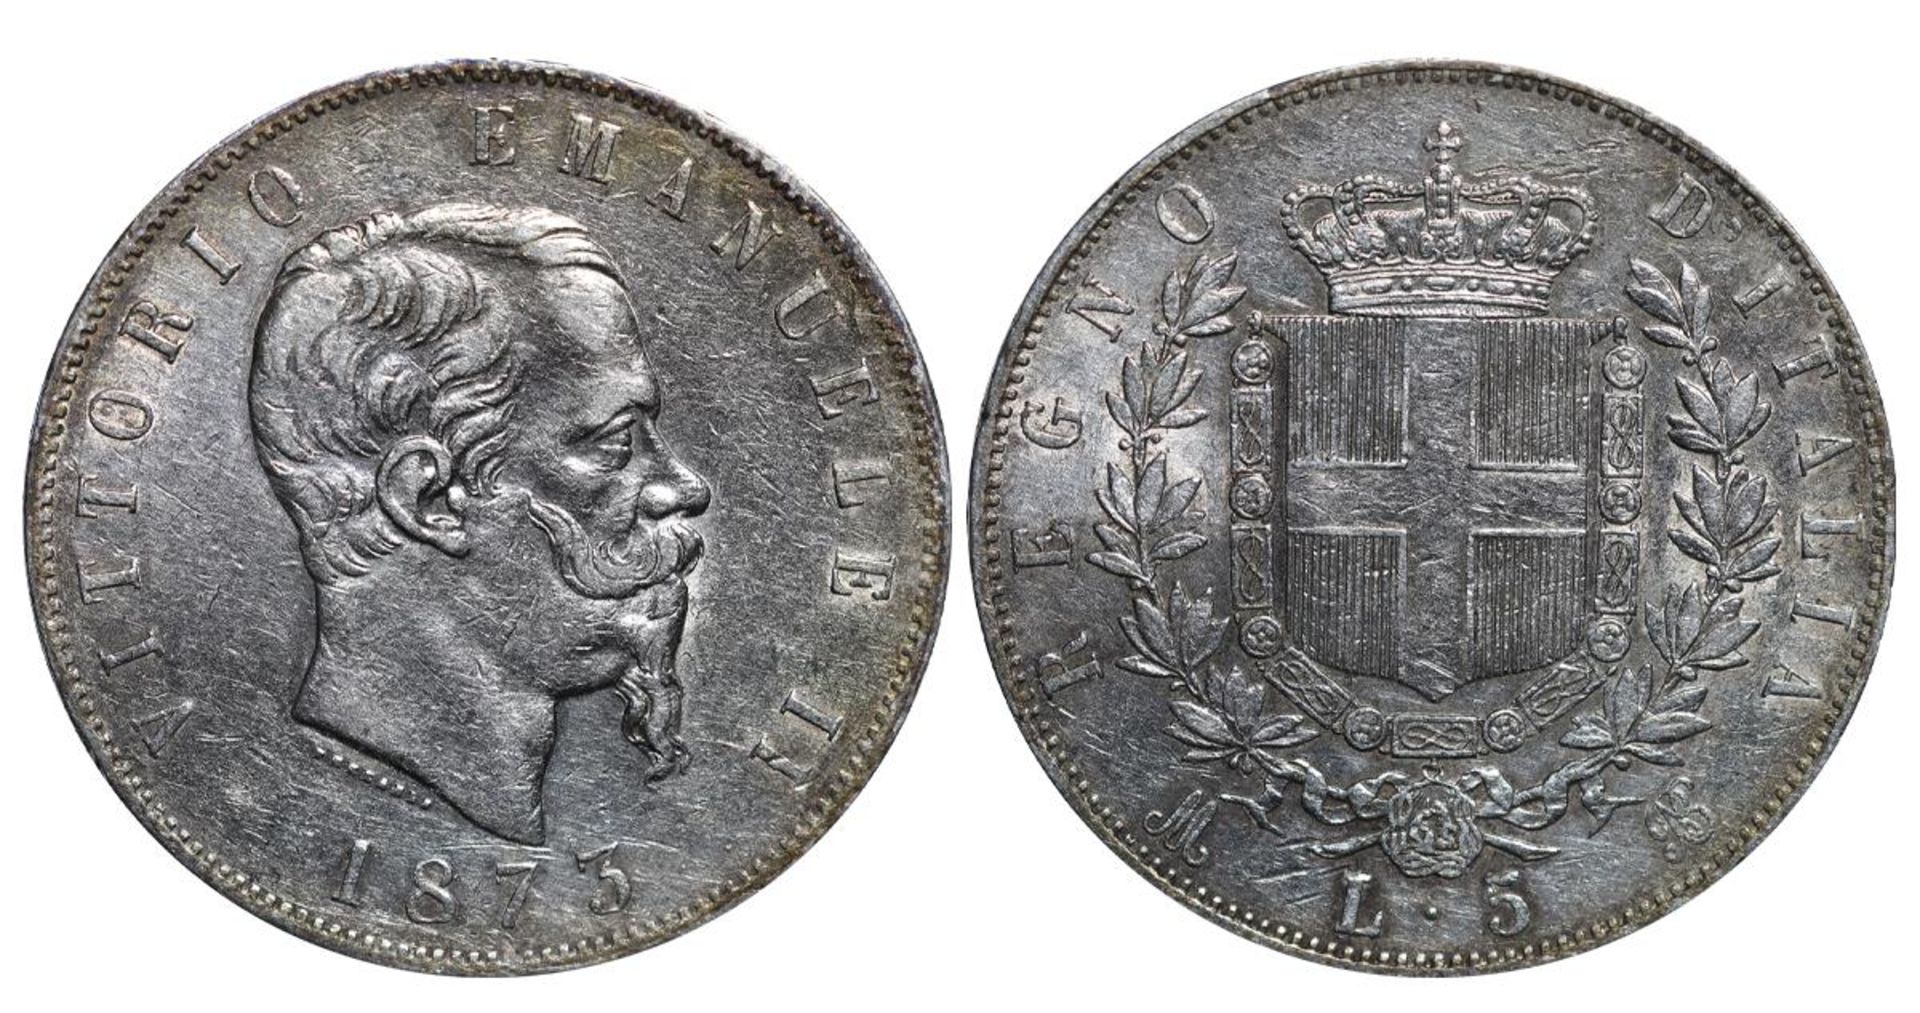 Italy, 5 Lire, 1873 year, M-B